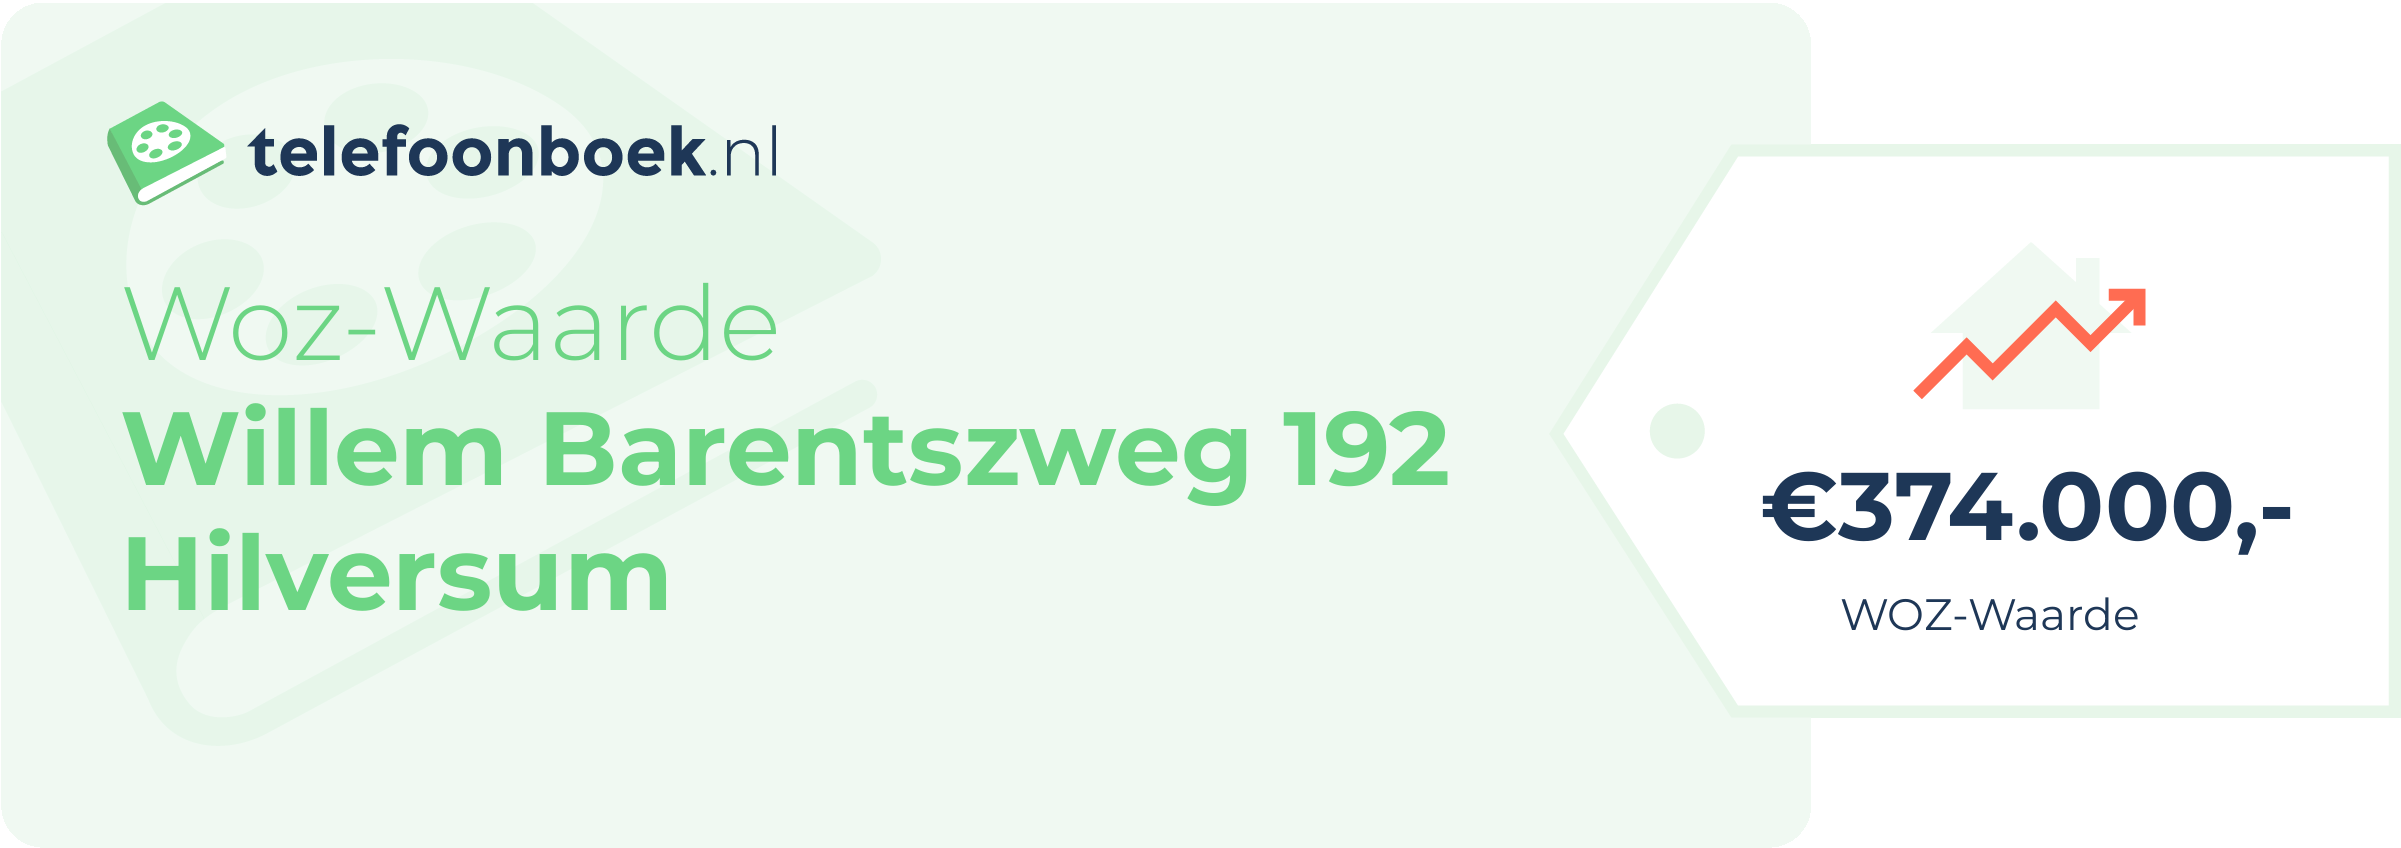 WOZ-waarde Willem Barentszweg 192 Hilversum